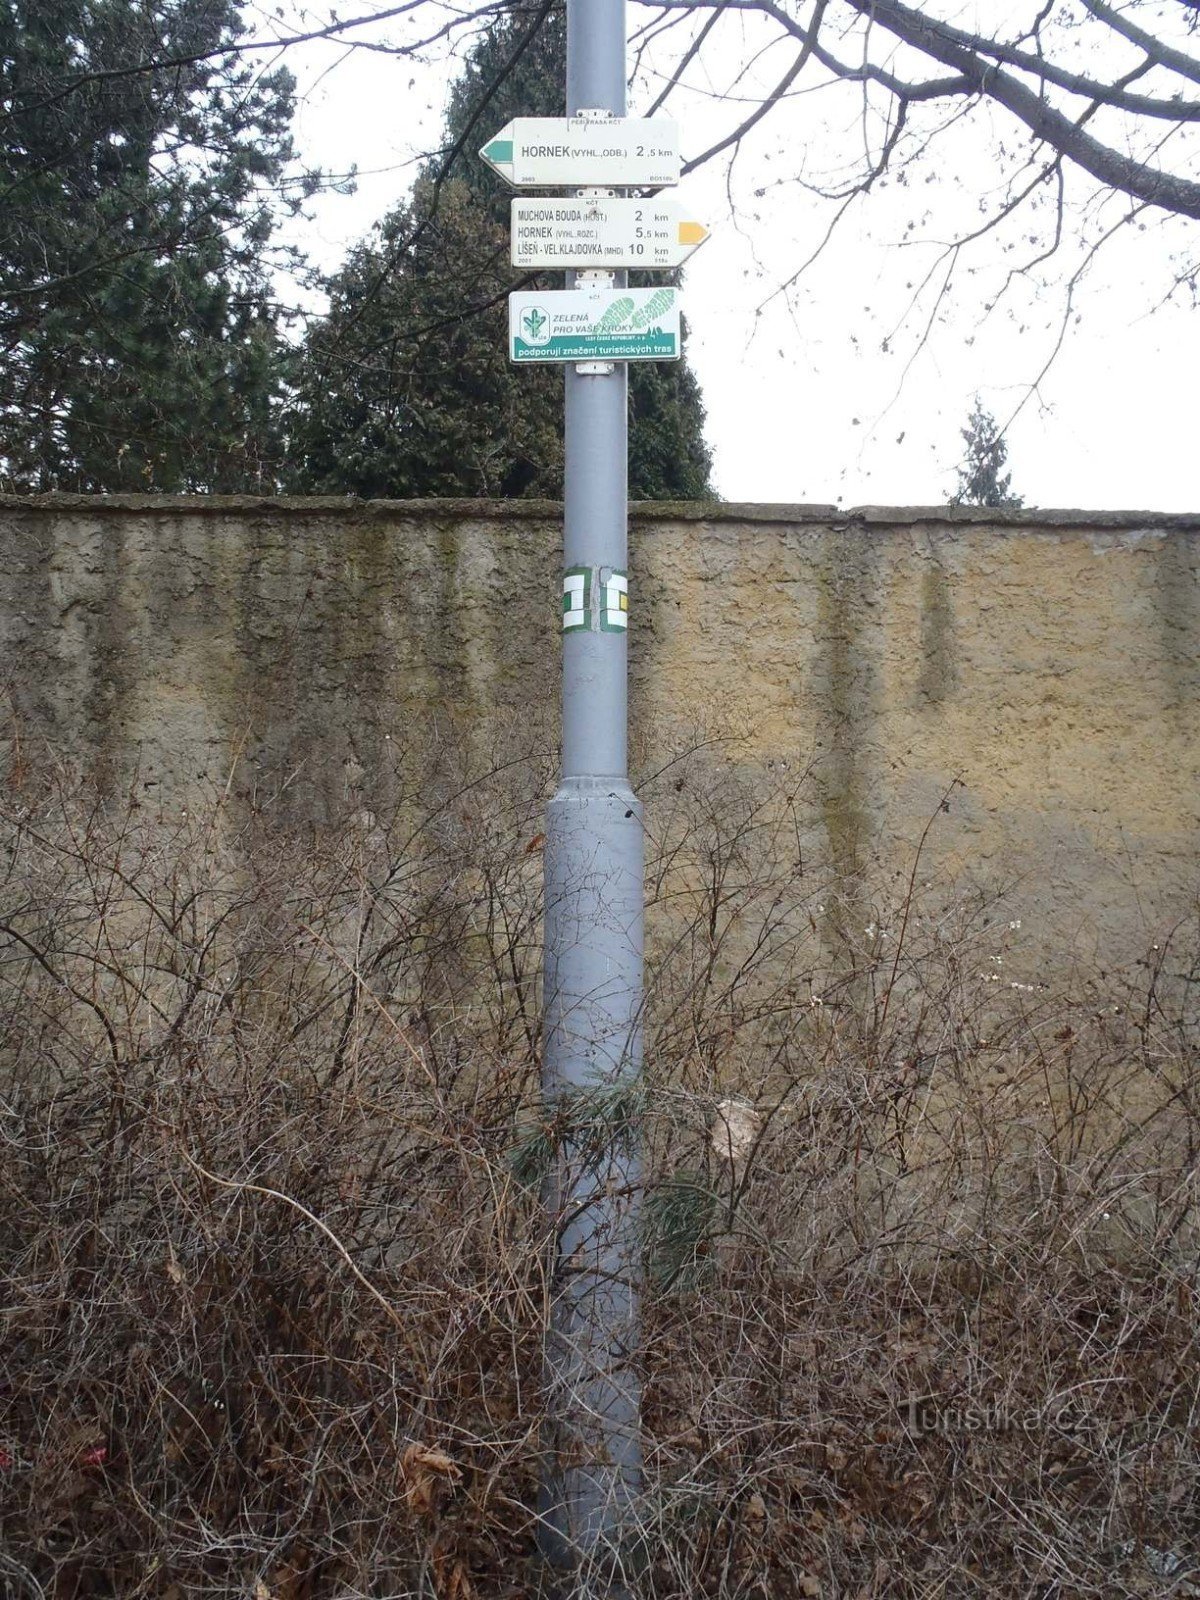 Signpost Brno Líšeň (public transport) - 6.2.2012 February XNUMX